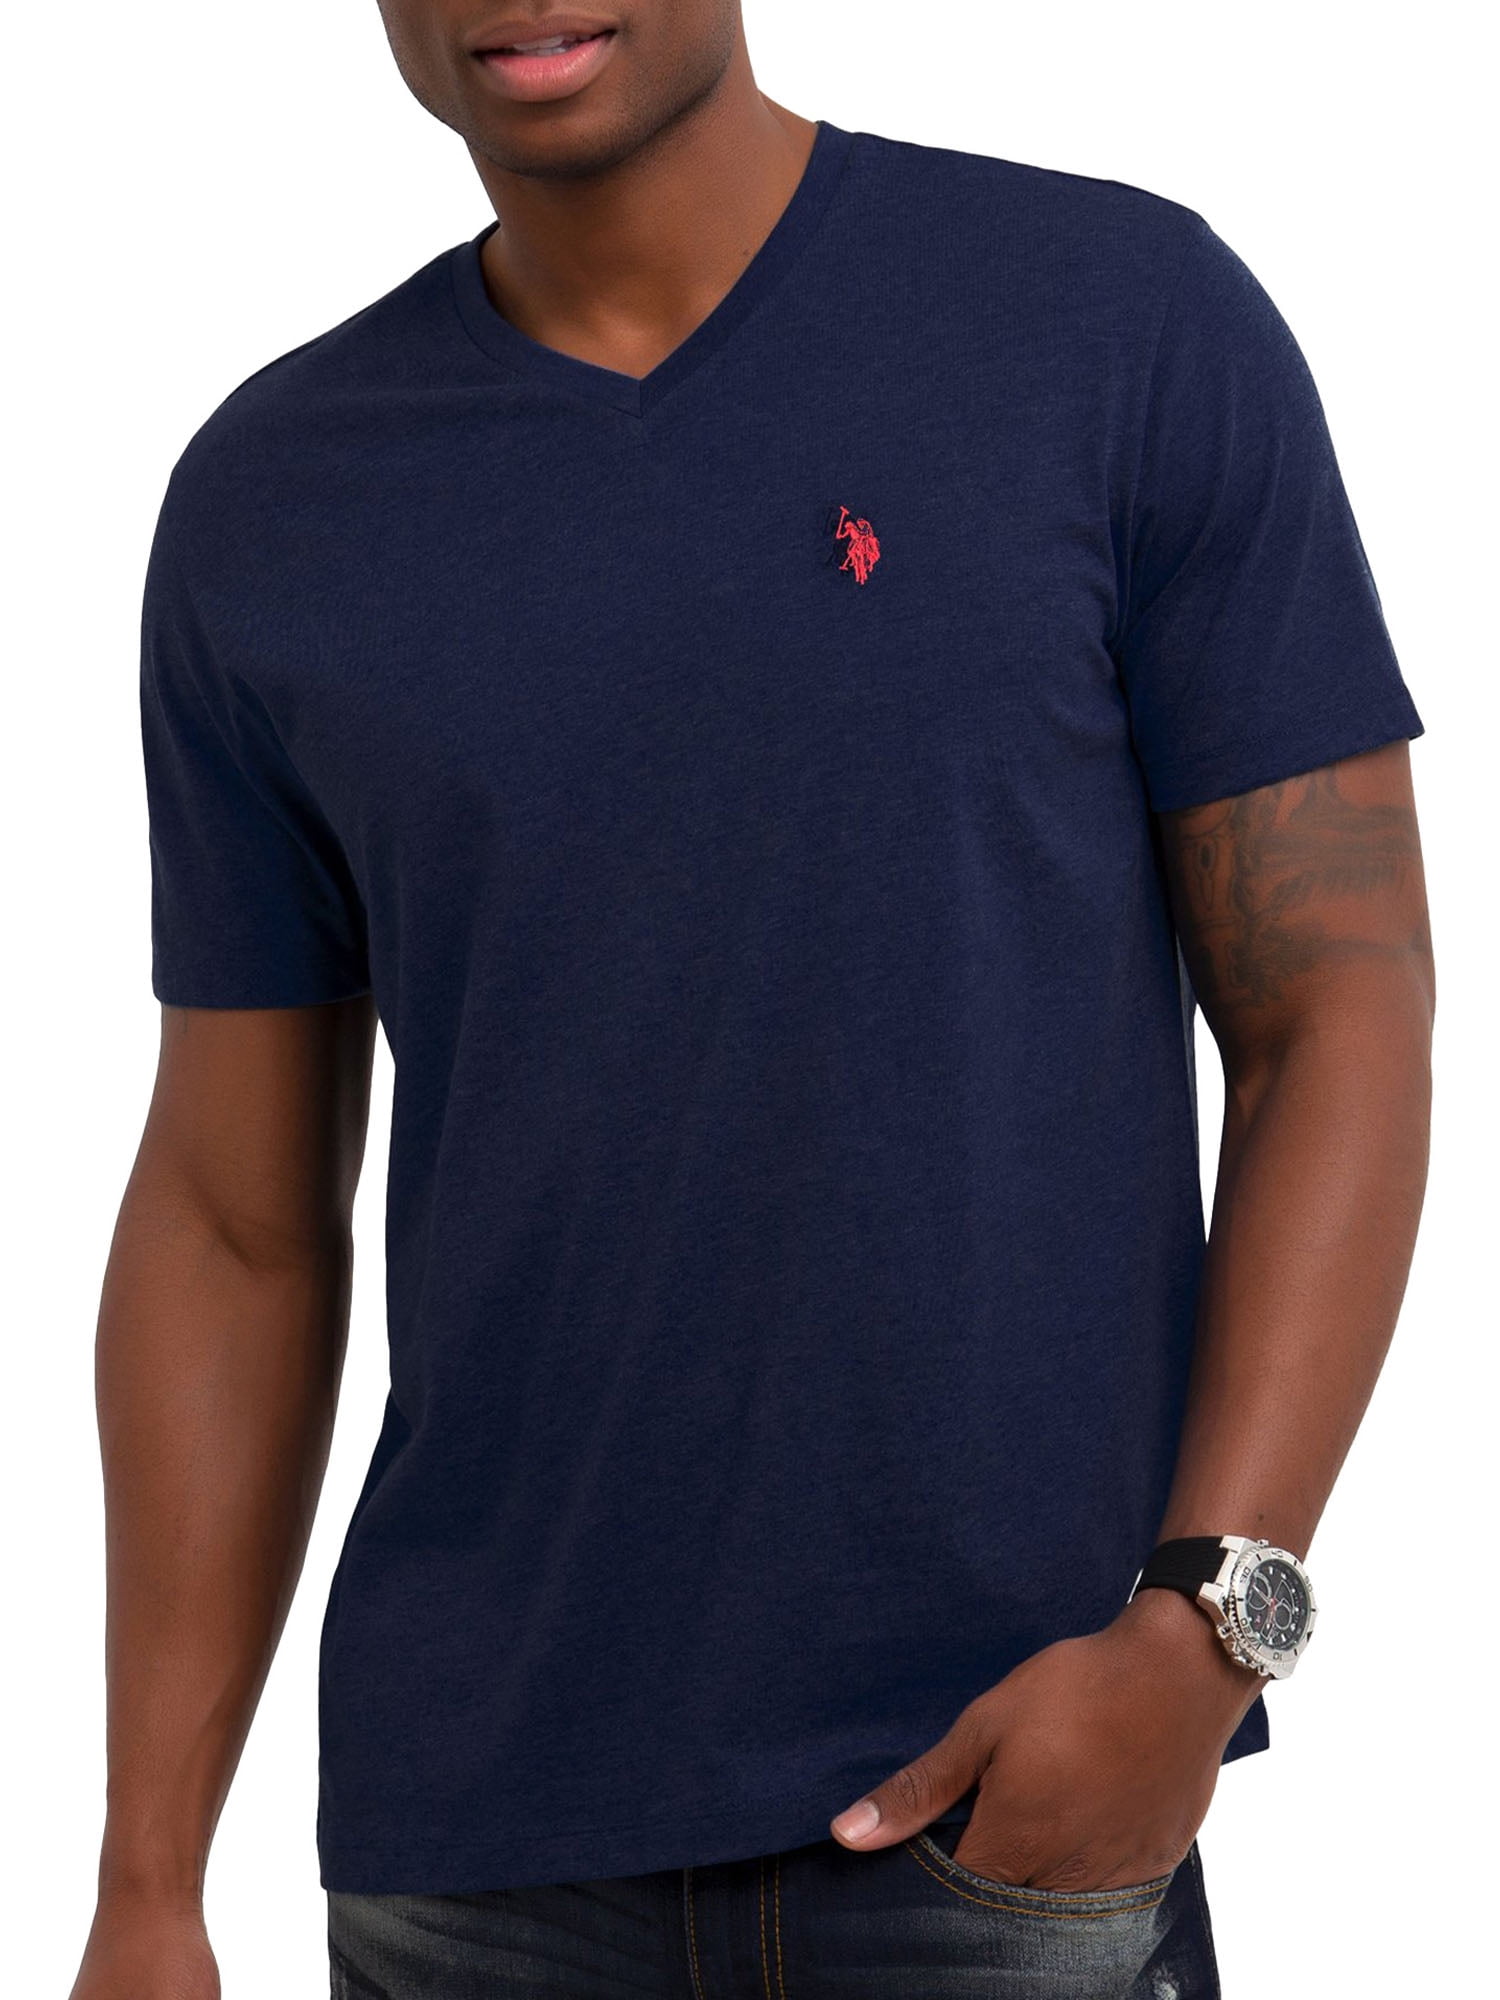 US Polo Assn Uspa Mens T Shirt V Neck Casual Short Sleeve Blue India Size L New 